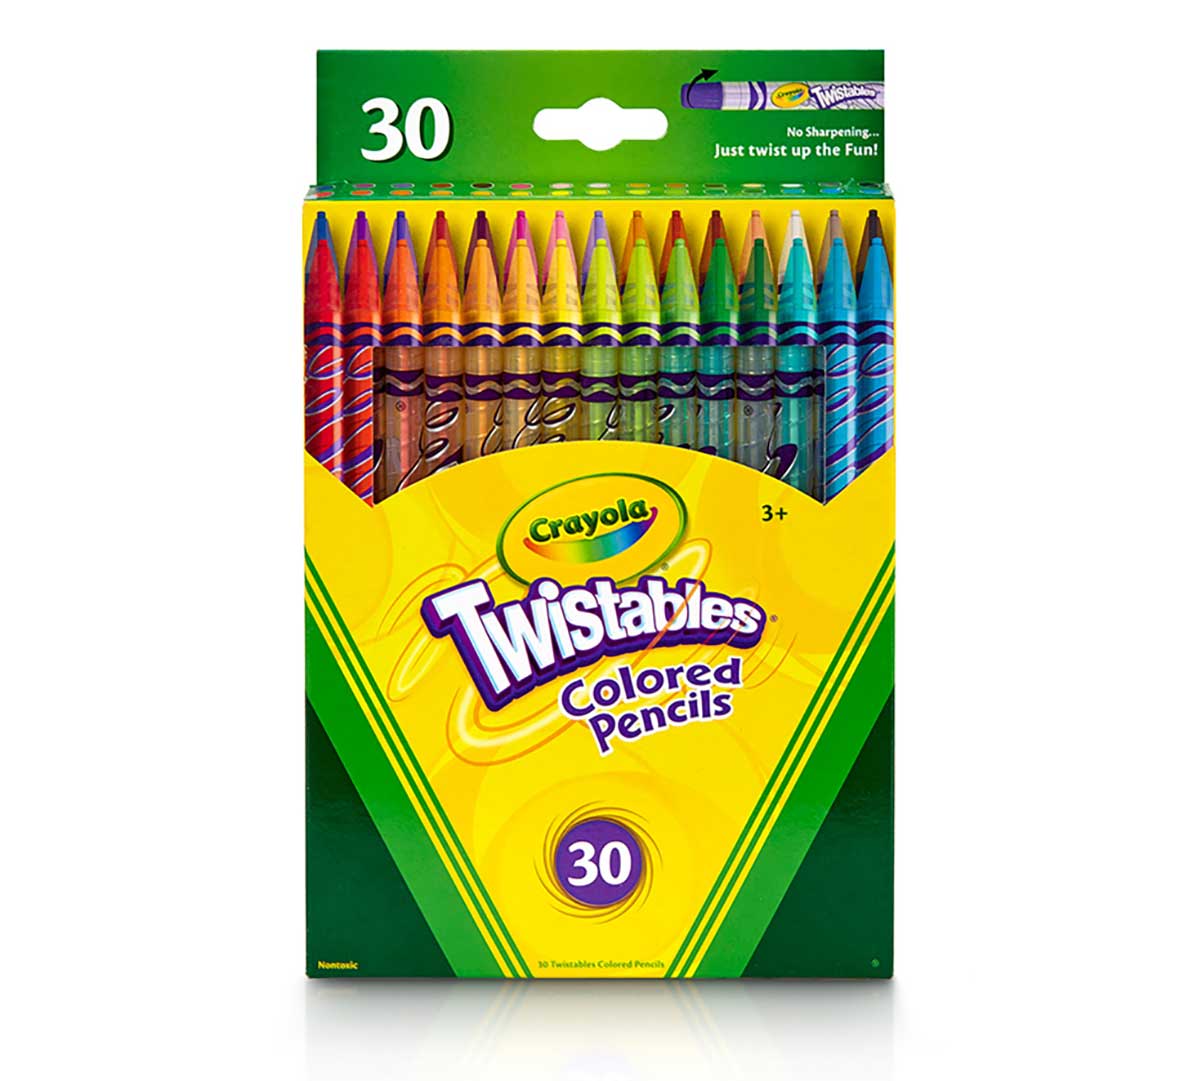 https://shop.crayola.com/on/demandware.static/-/Sites-crayola-storefront/default/dwd6b36568/images/68-7409-0-210_Twistables_Colored-Pencils_30ct_PDP-1_F1.jpg